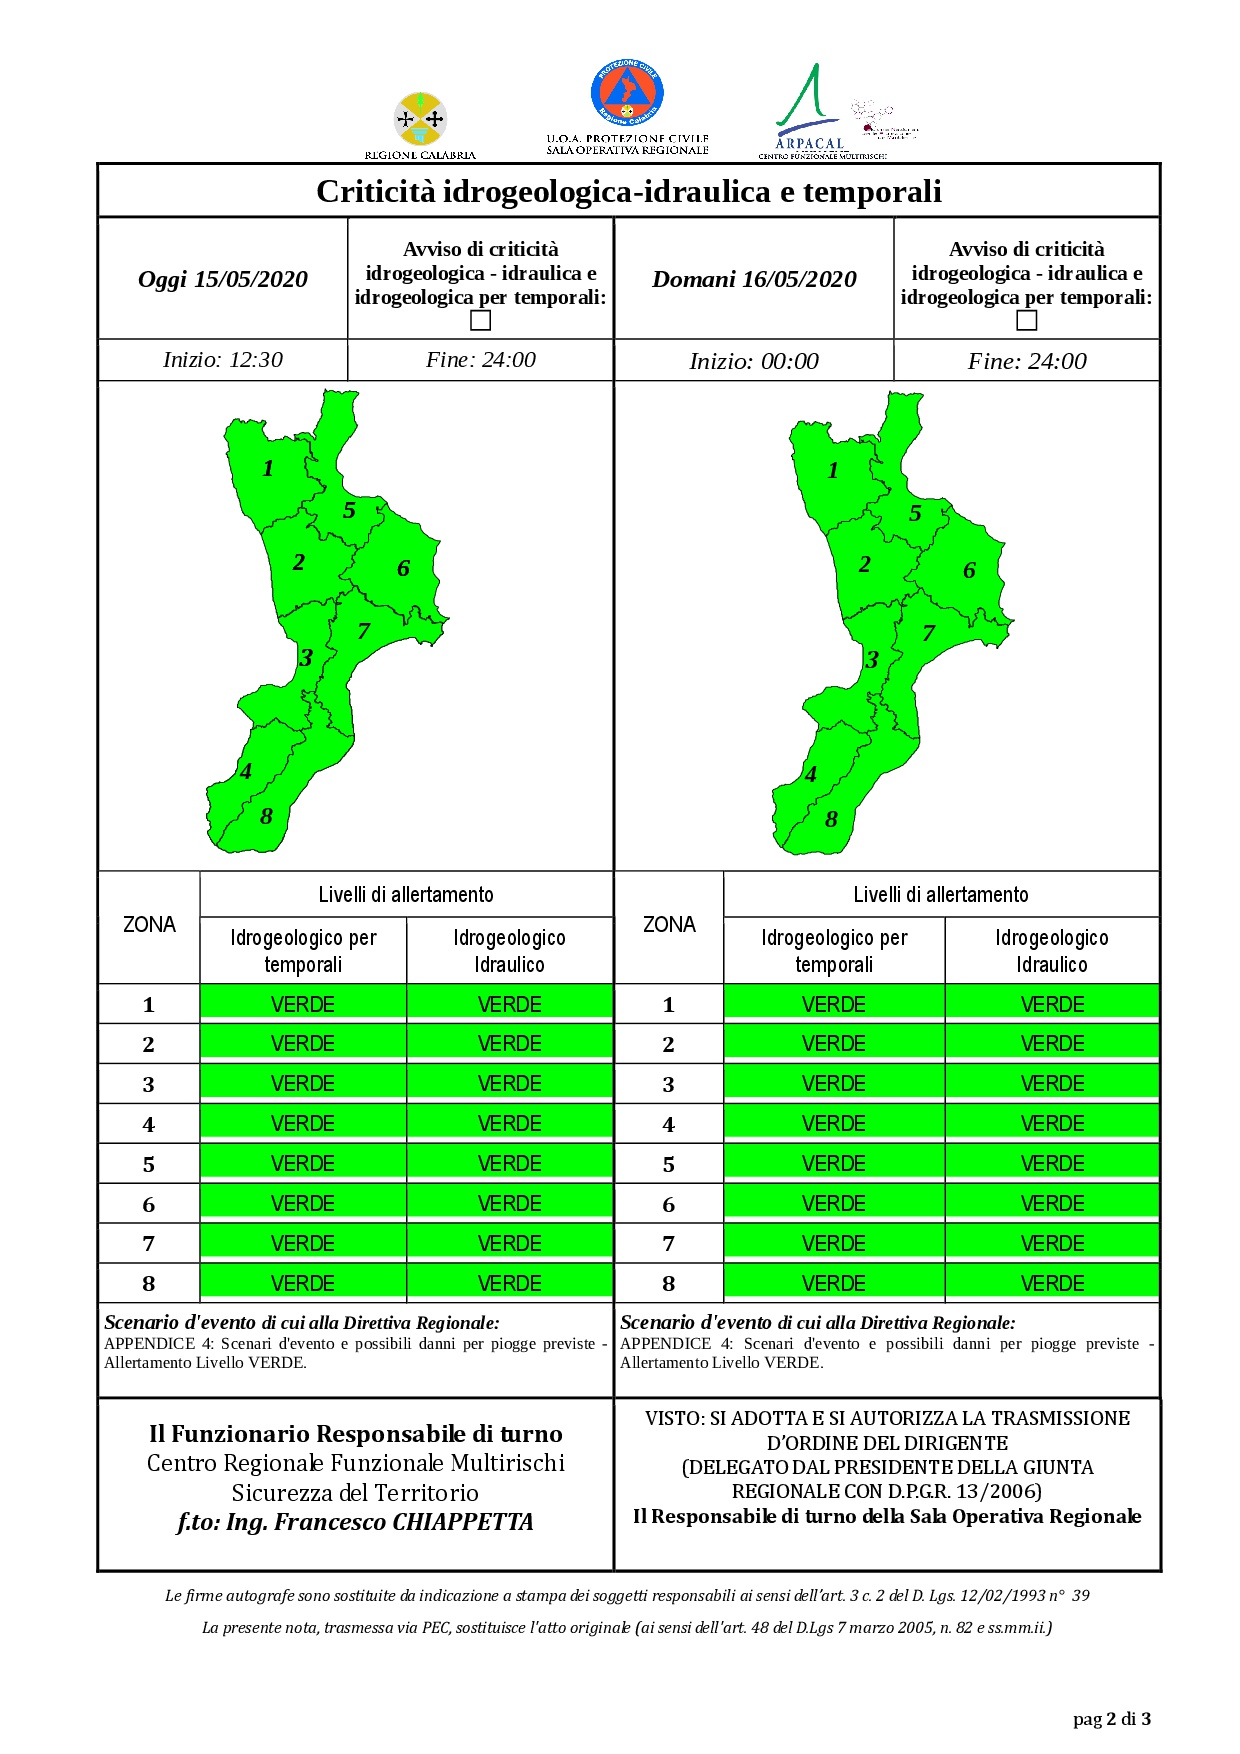 Criticità idrogeologica-idraulica e temporali in Calabria 15-05-2020